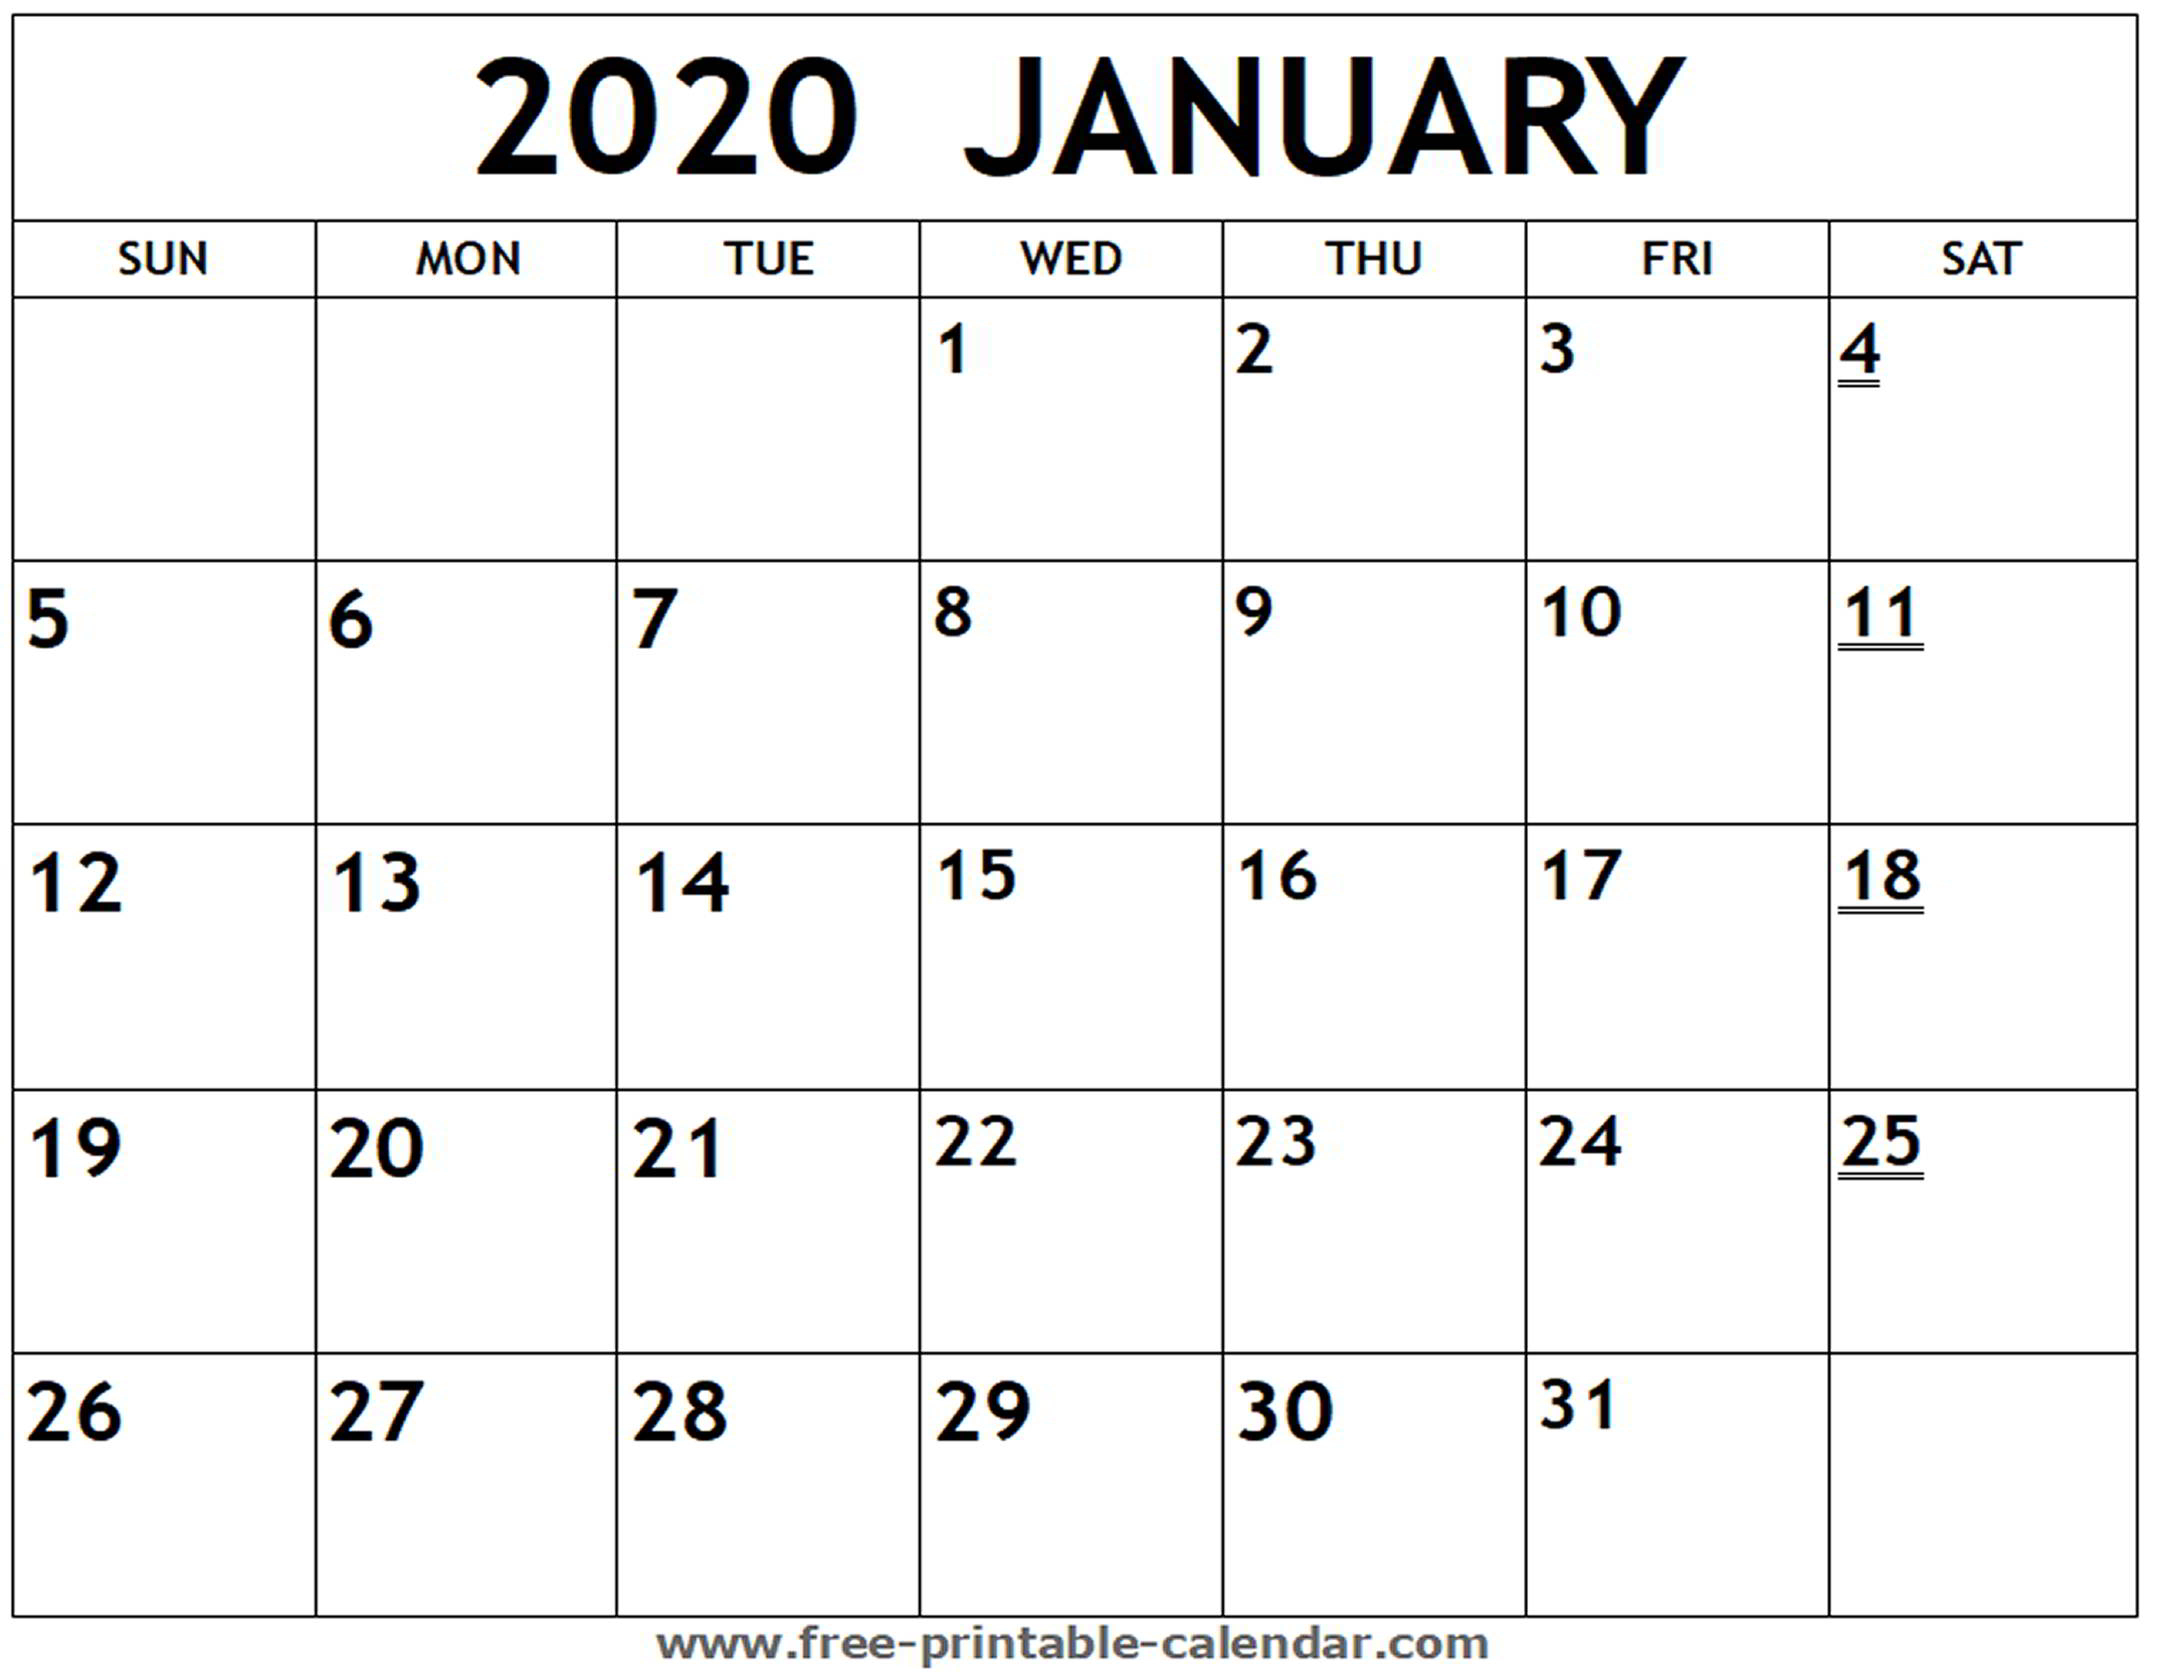 Printable 2020 January Calendar - Free-Printable-Calendar